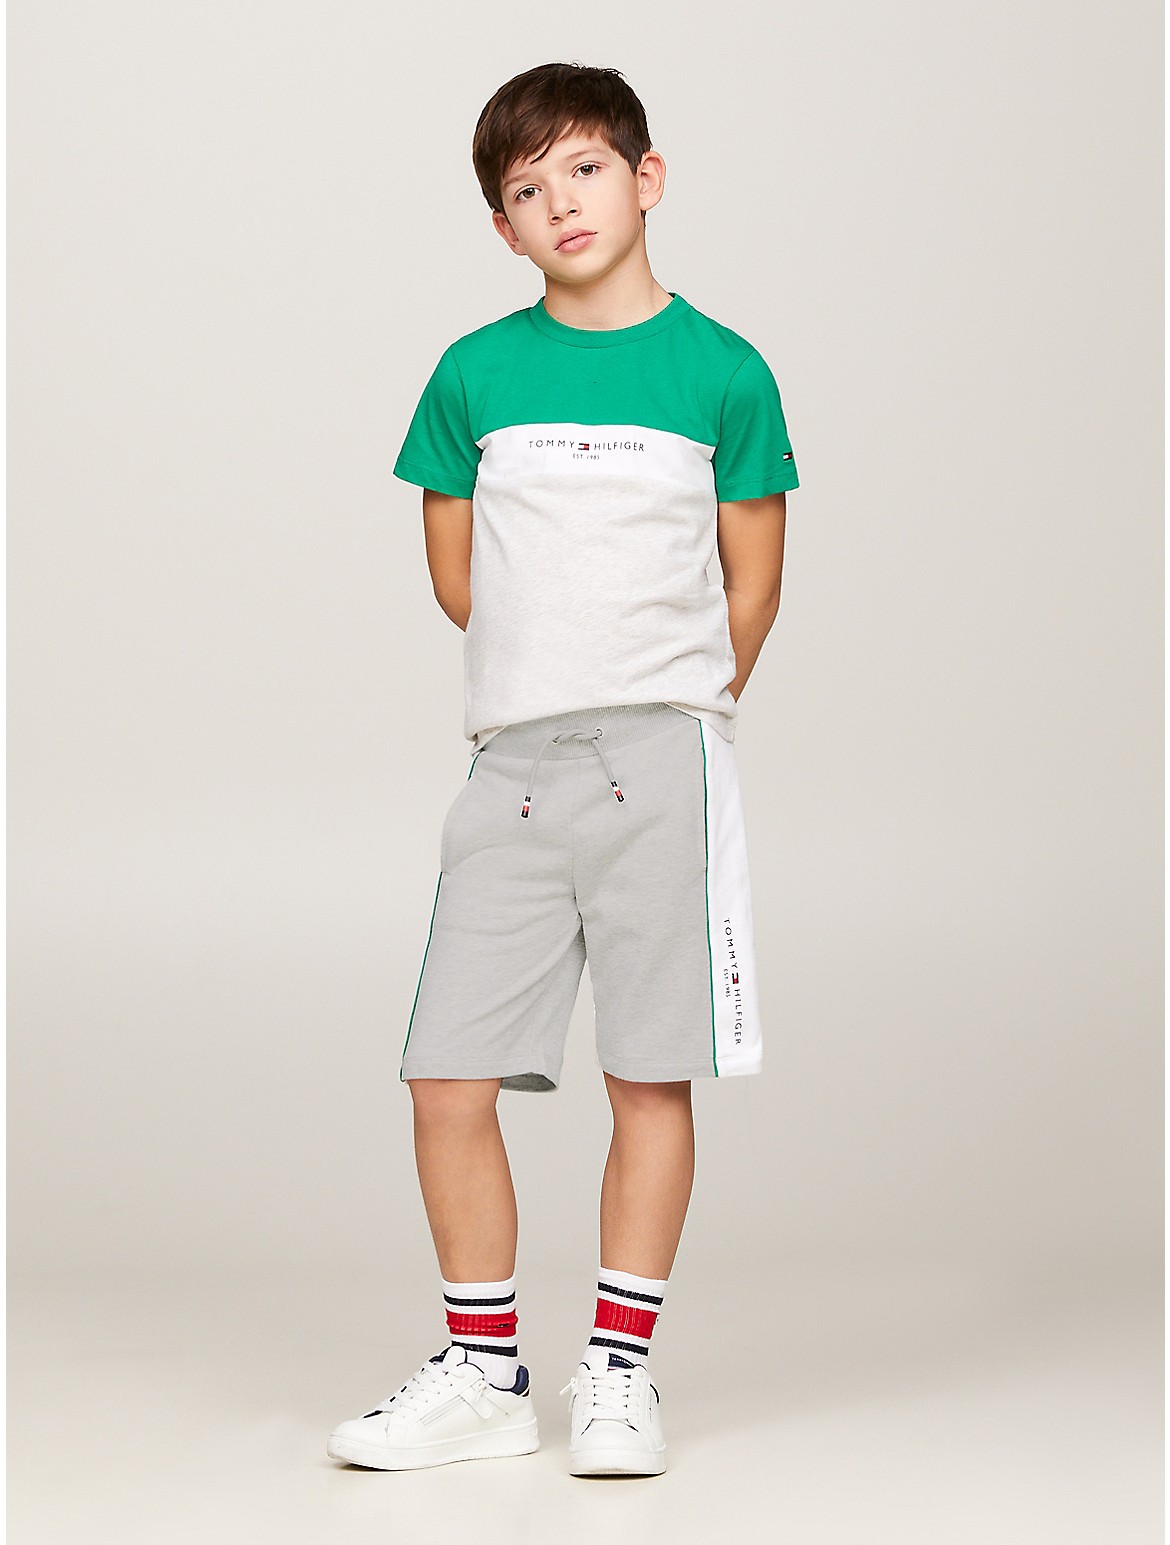 Tommy Hilfiger Boys' Kids' Colorblock T-Shirt and Short Set